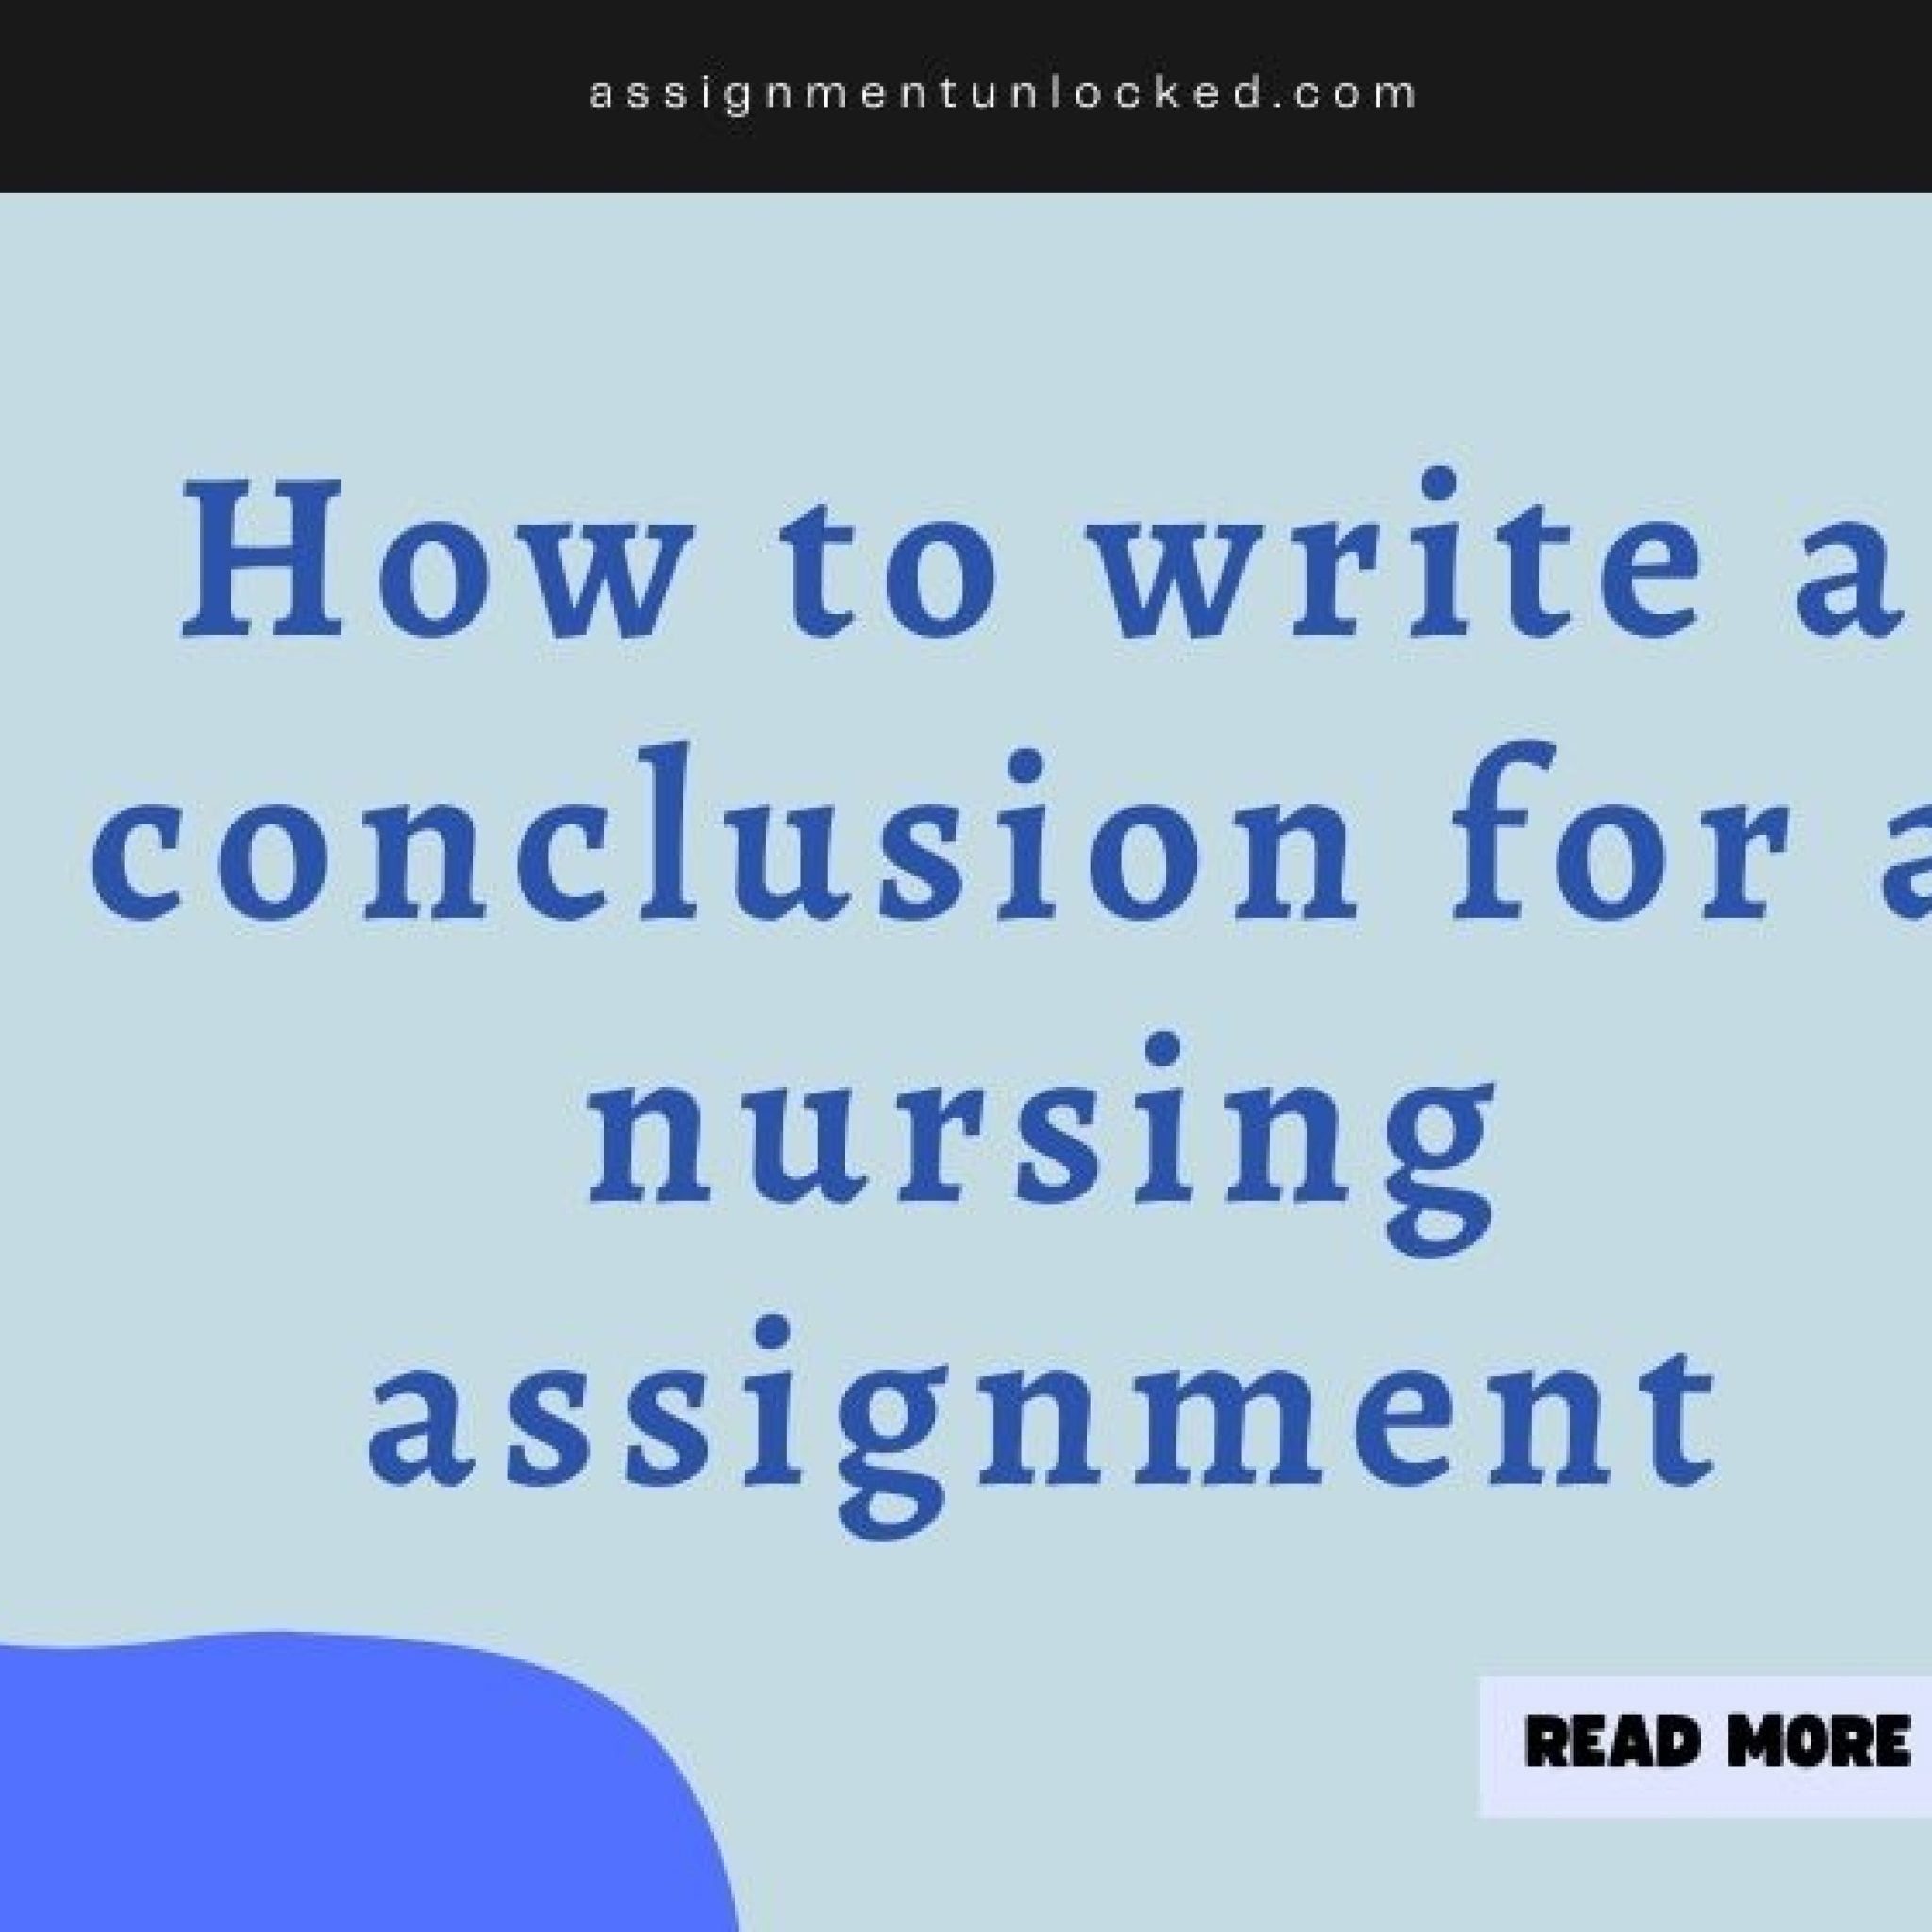 nursing assignment